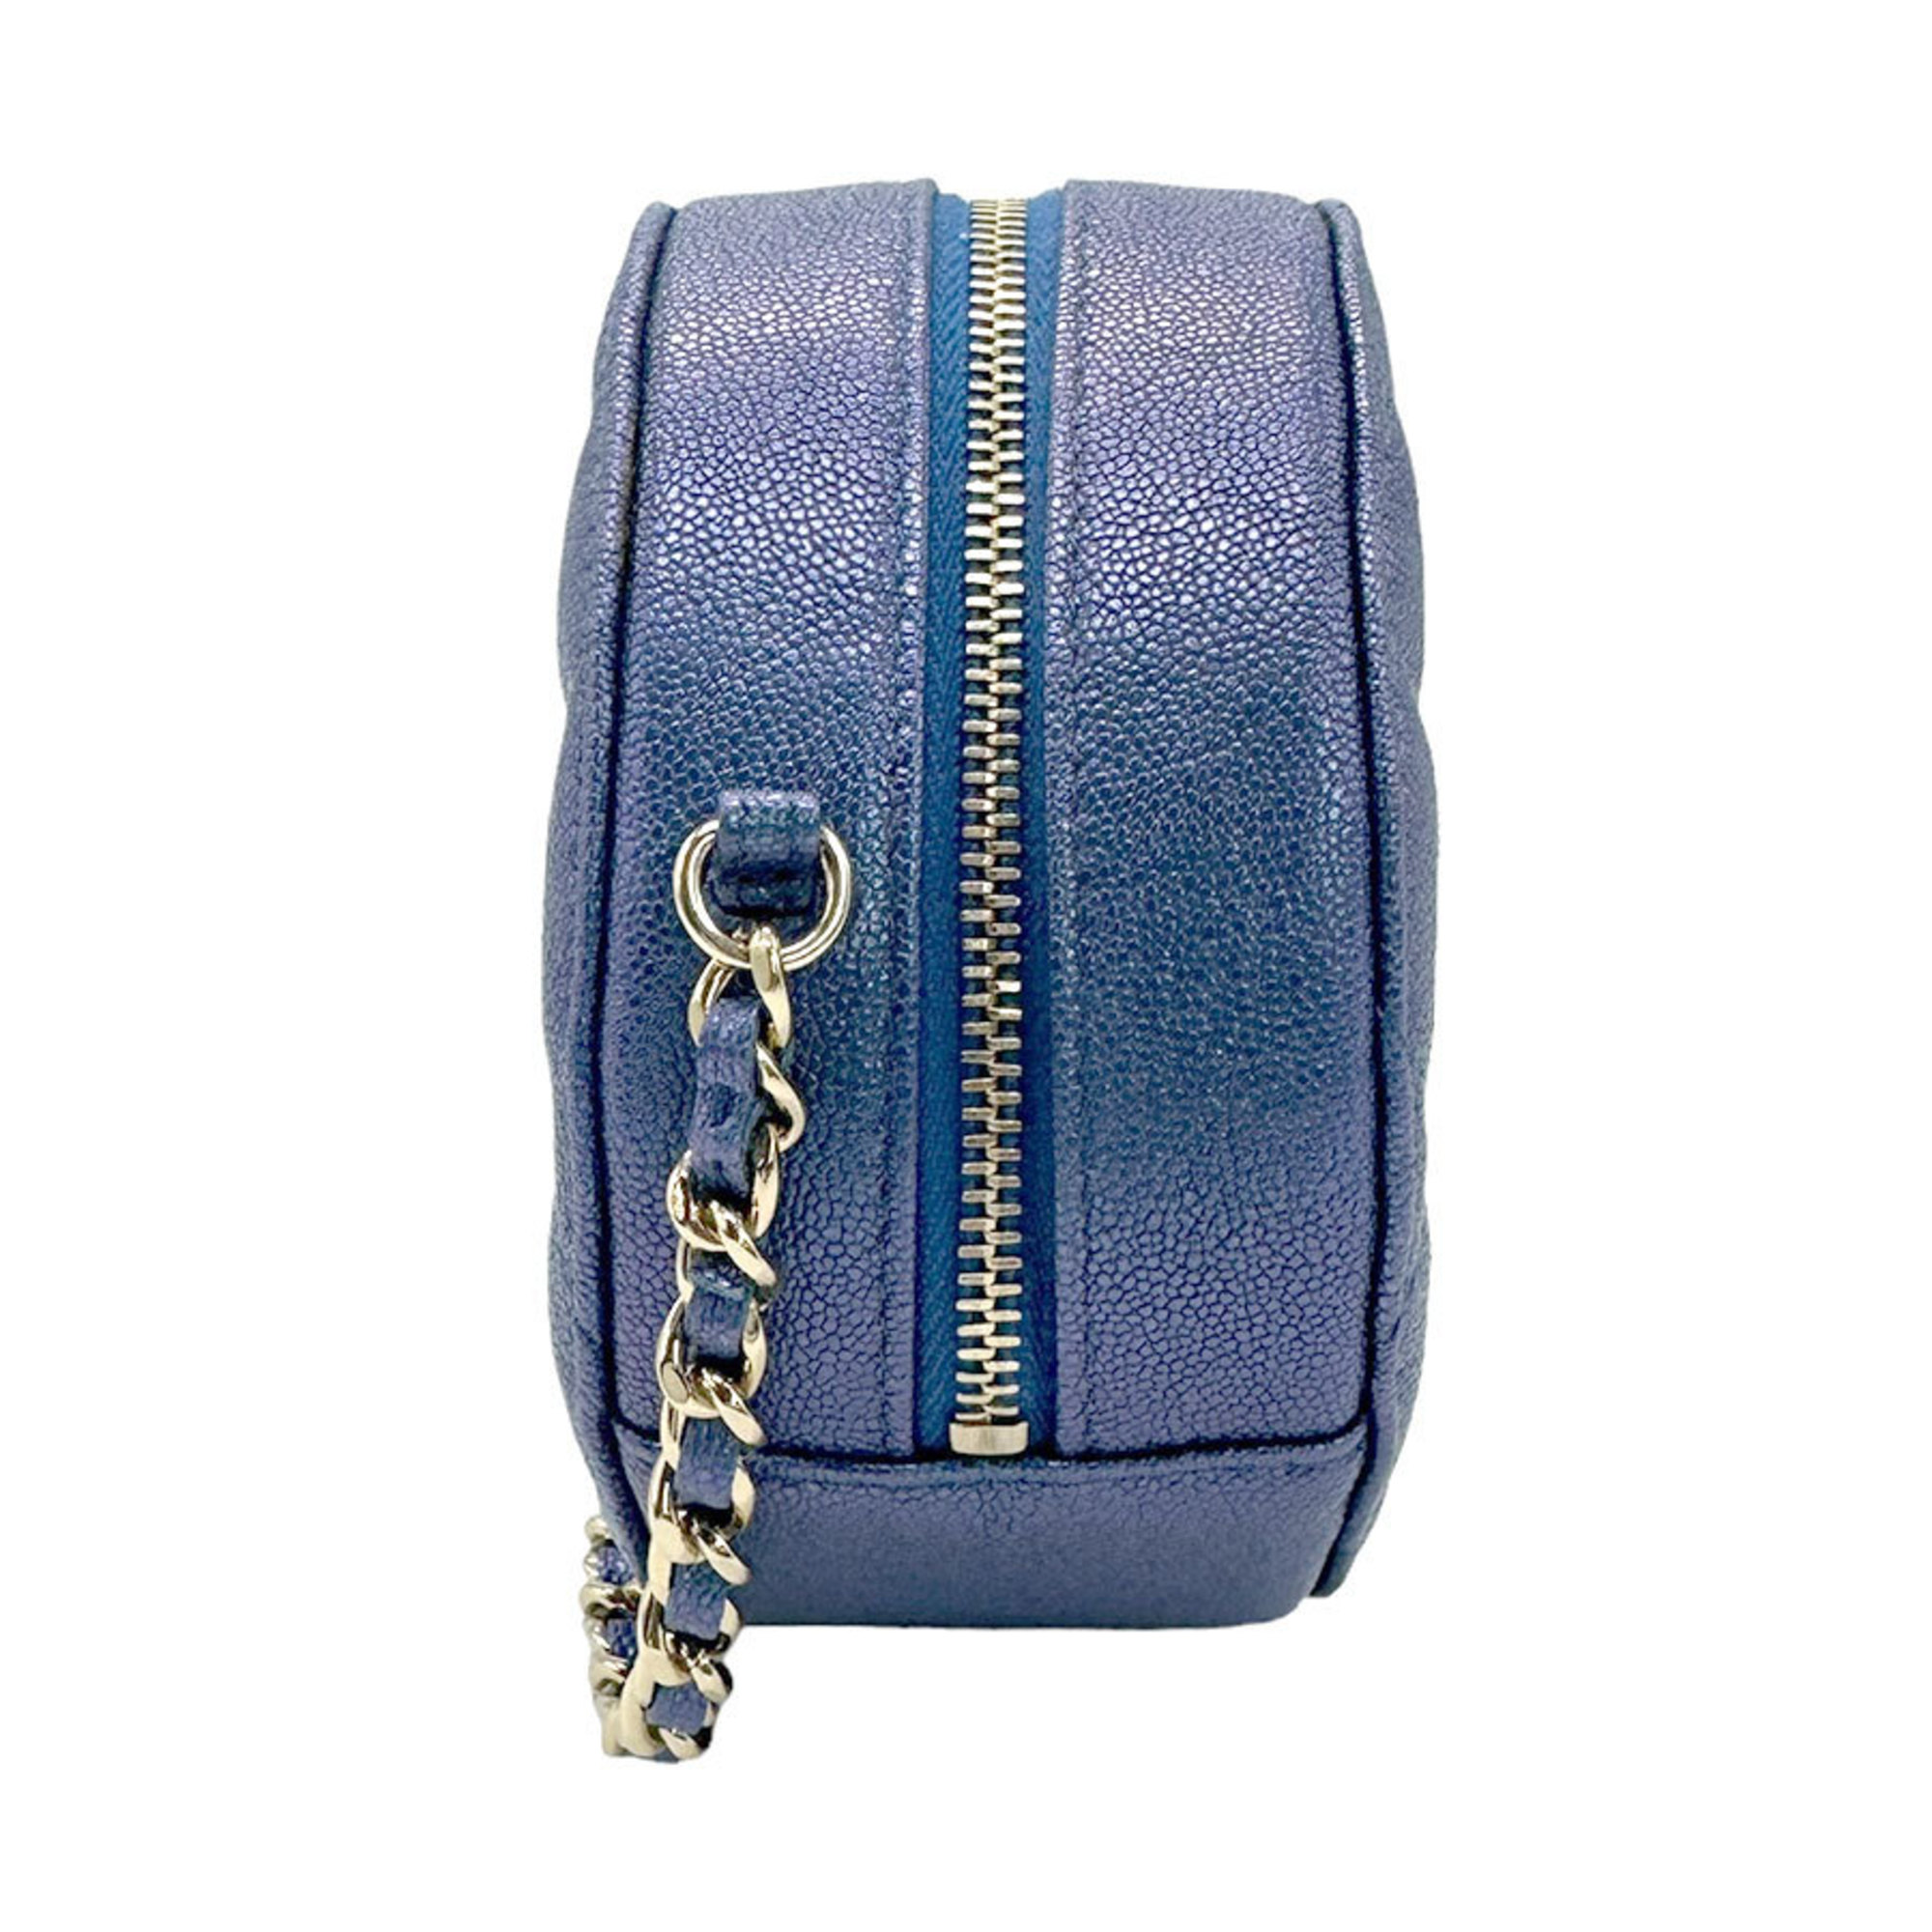 CHANEL Shoulder Bag Pochette Leather Metallic Blue Women's z0920